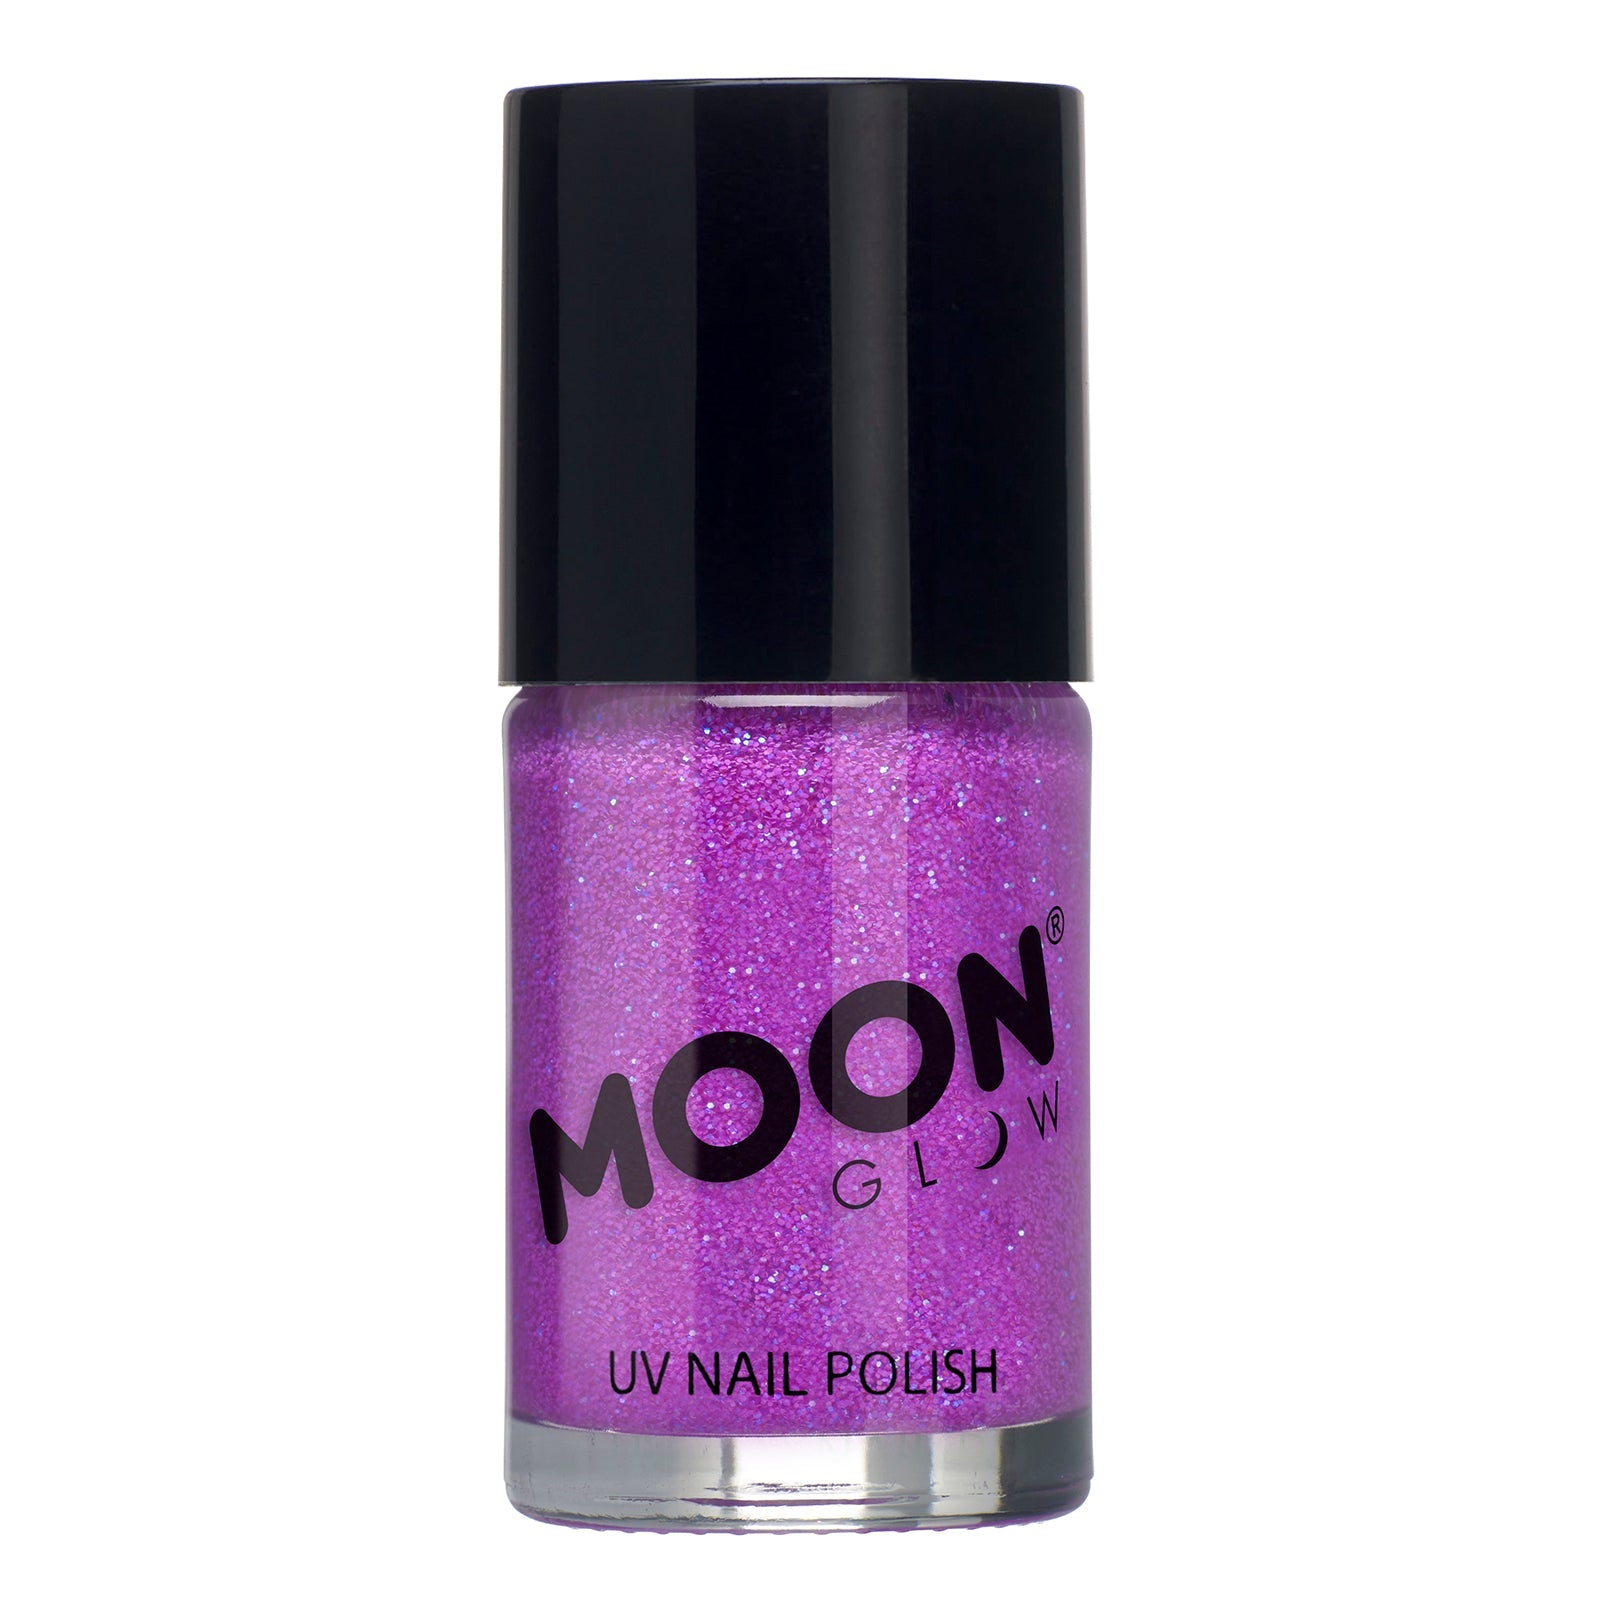 Purple - UV Glitter Nail Polish, 14mL. Cosmetically certified, FDA & Health Canada compliant, cruelty free and vegan.